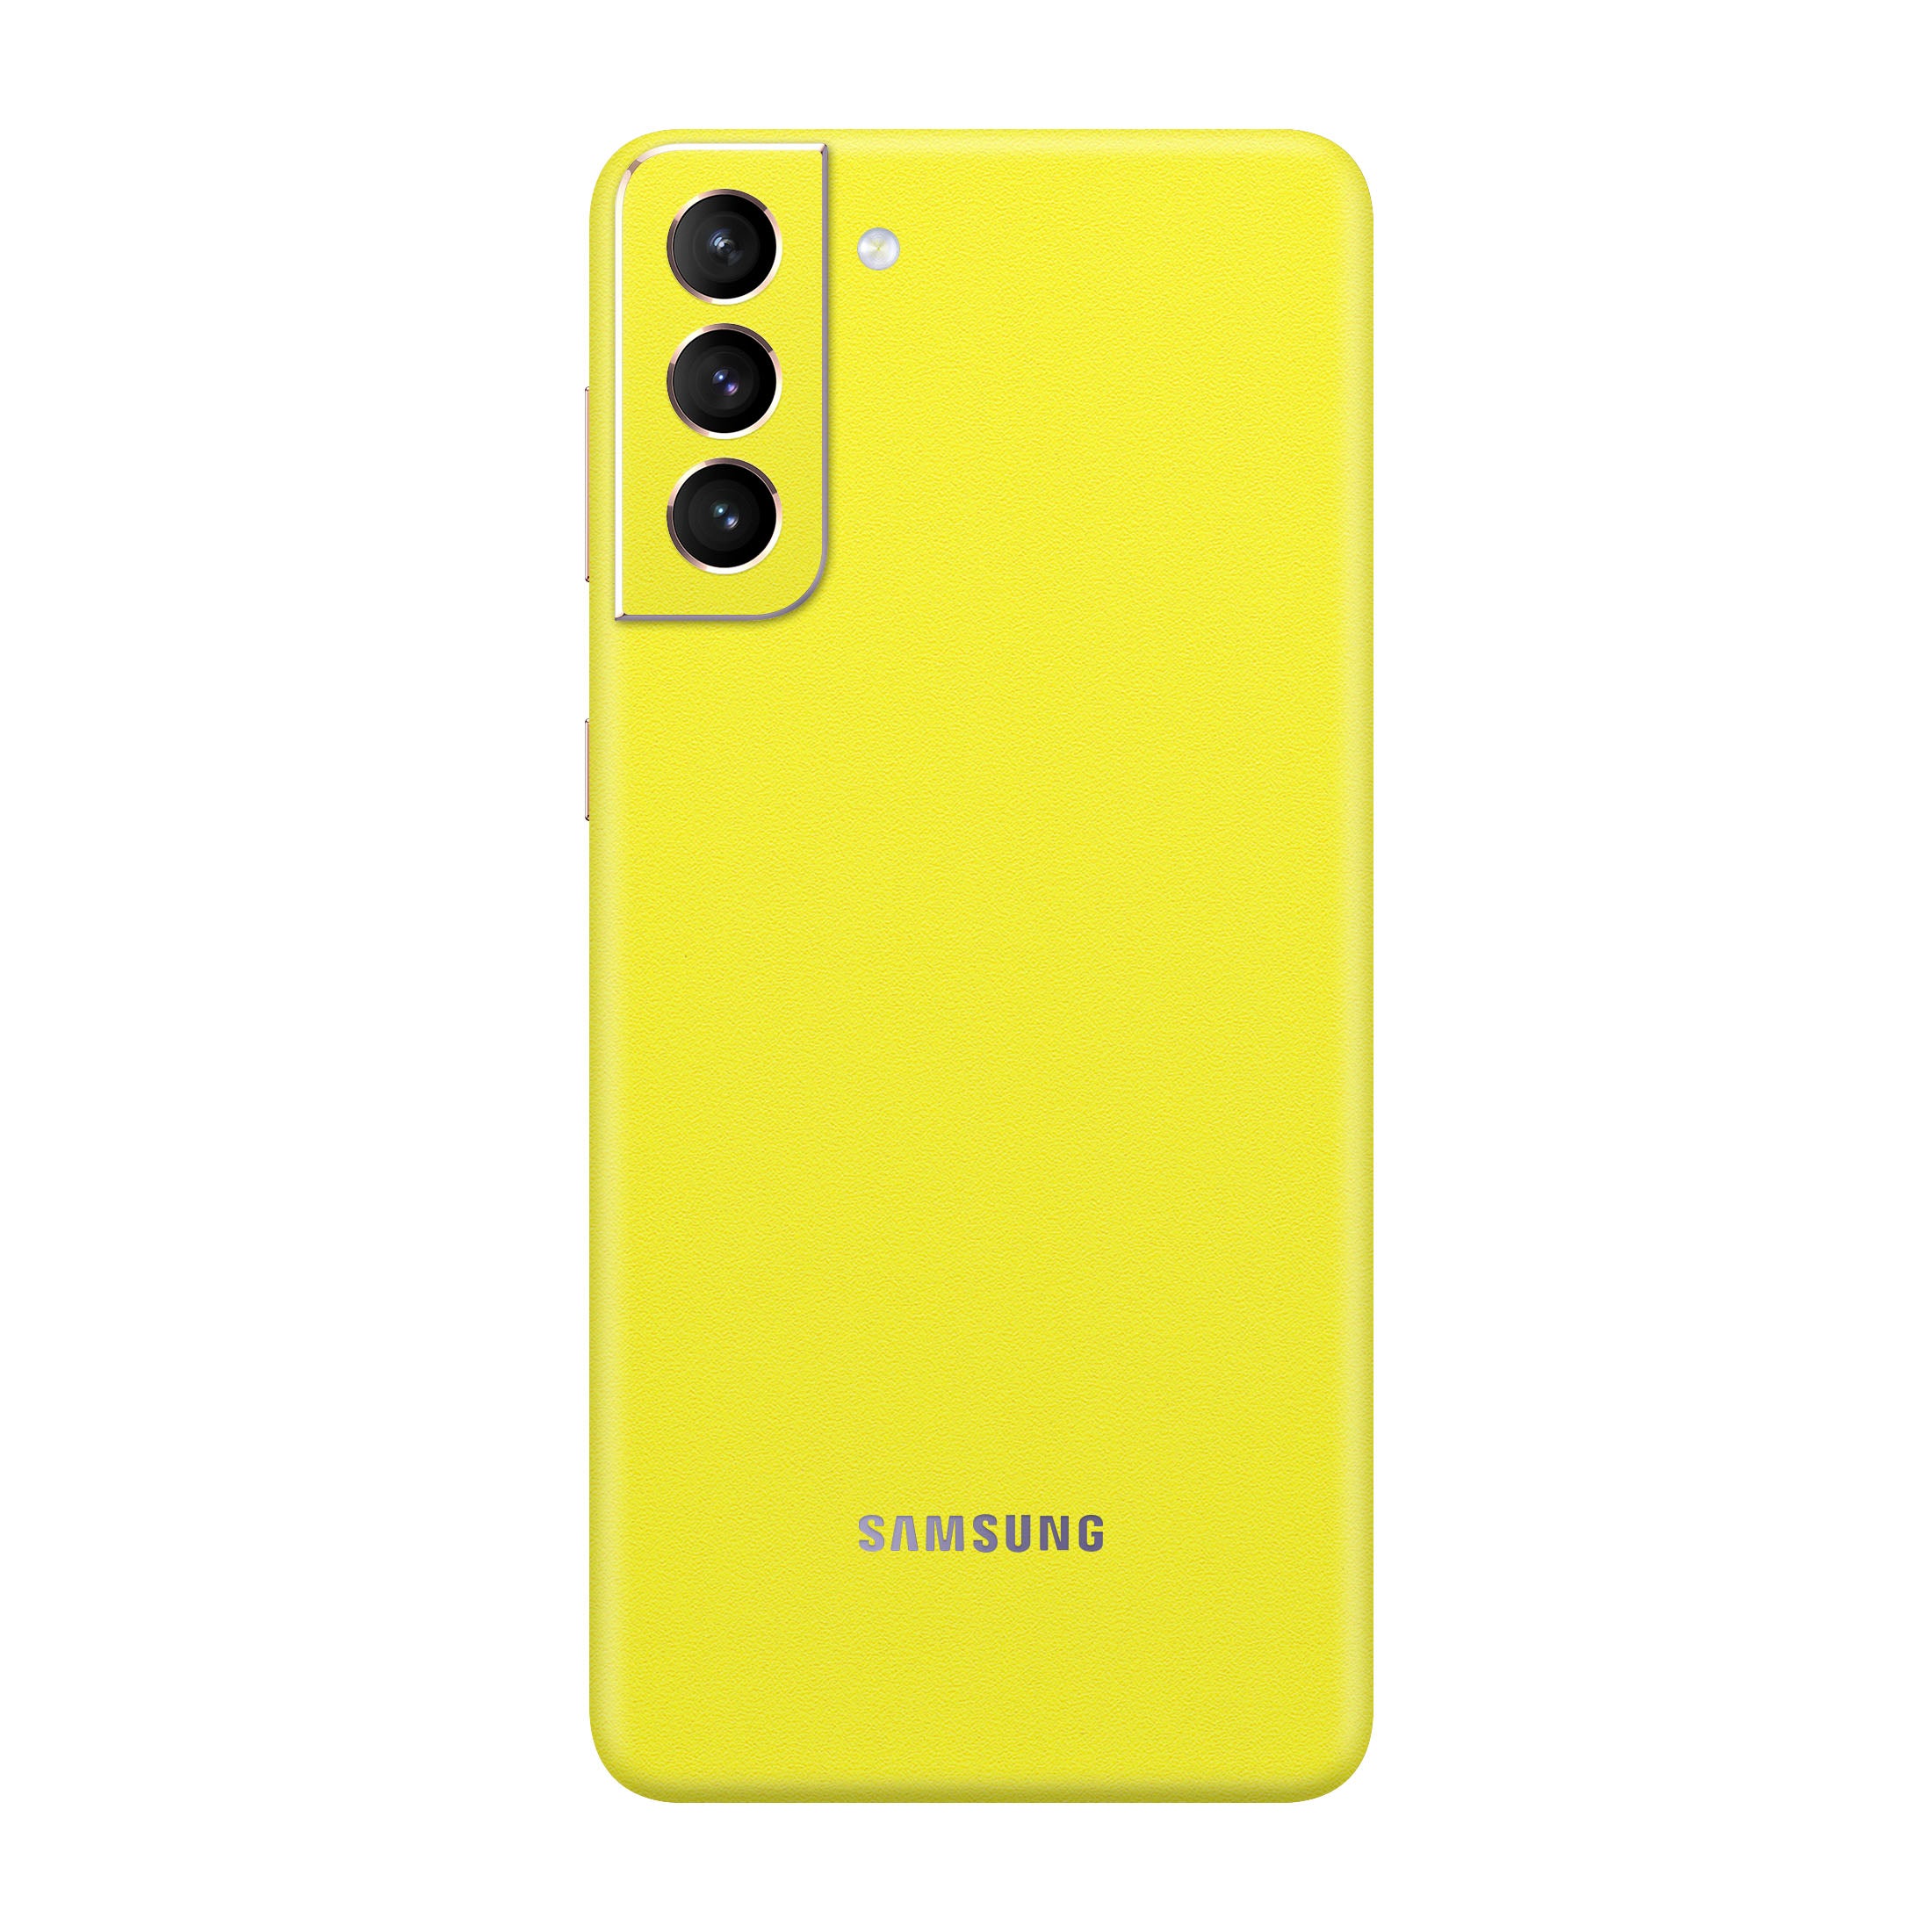 Gloss Yellow Skin for Samsung S21 FE